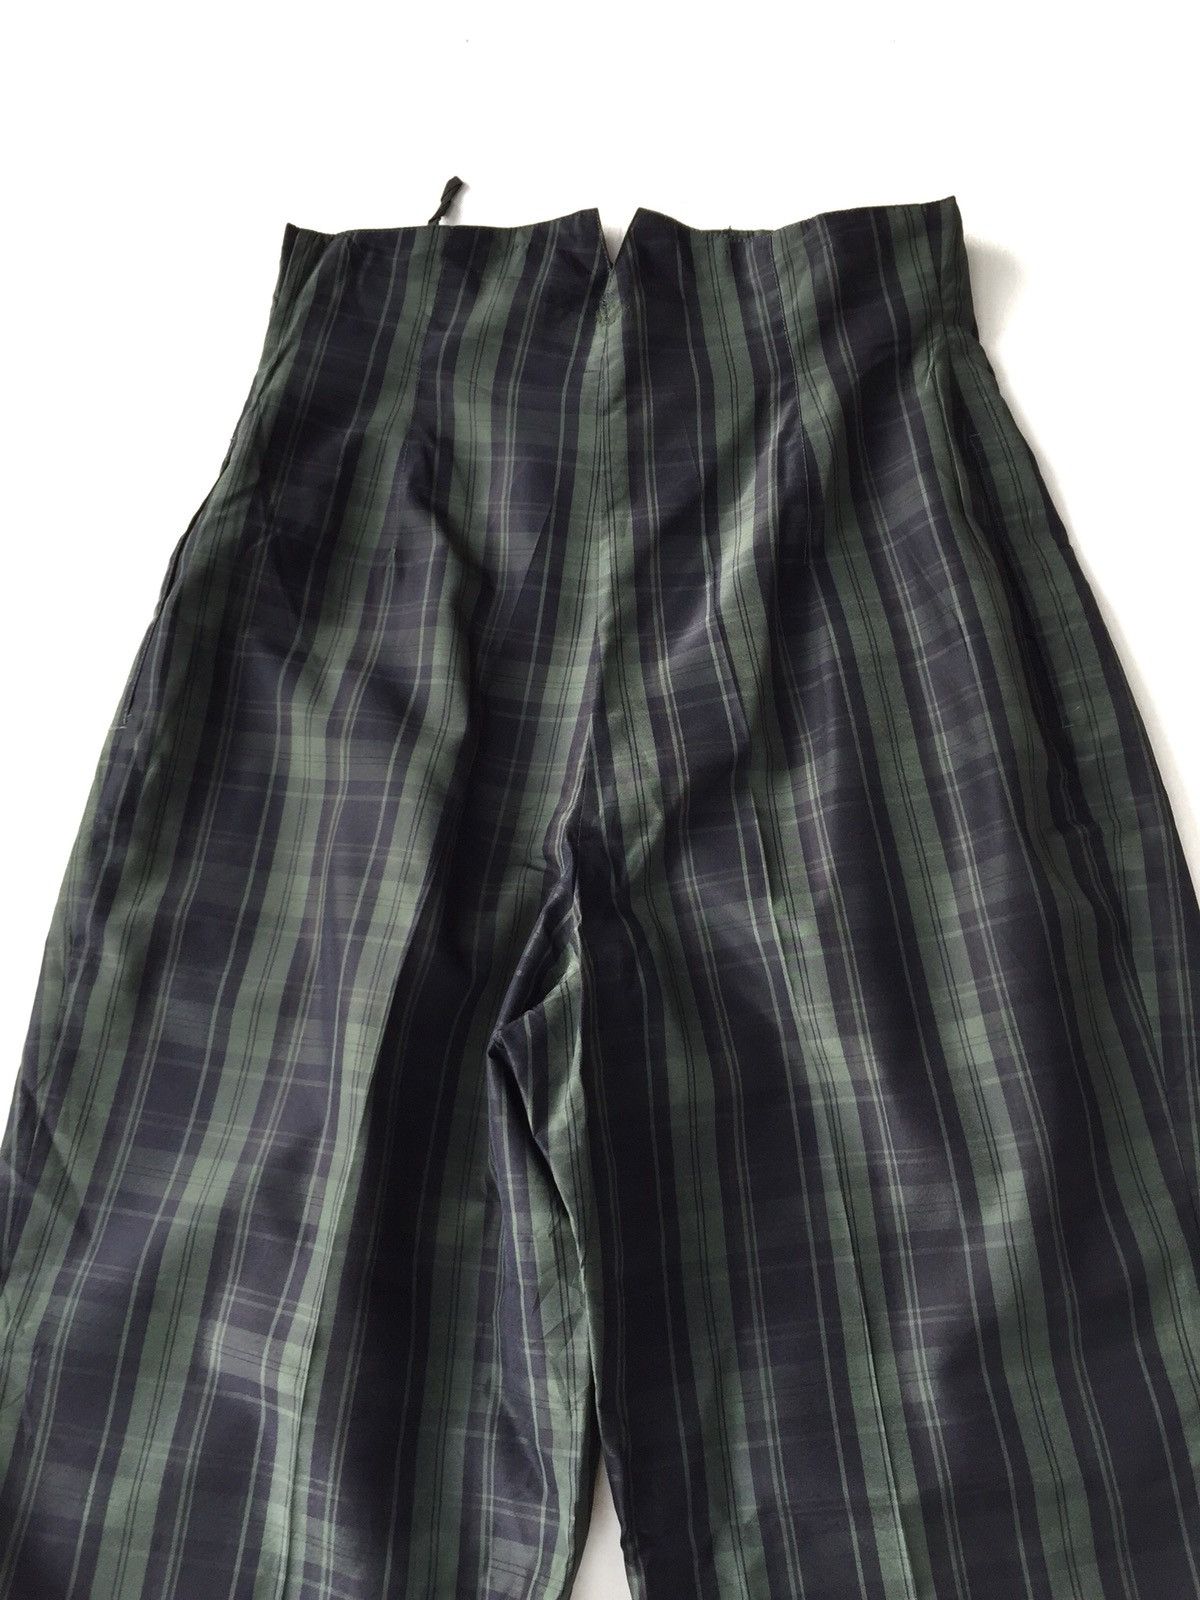 Vintage Vintage Norma Kamali Checkered High Waist Pants Size US 26 / EU 42 - 4 Thumbnail